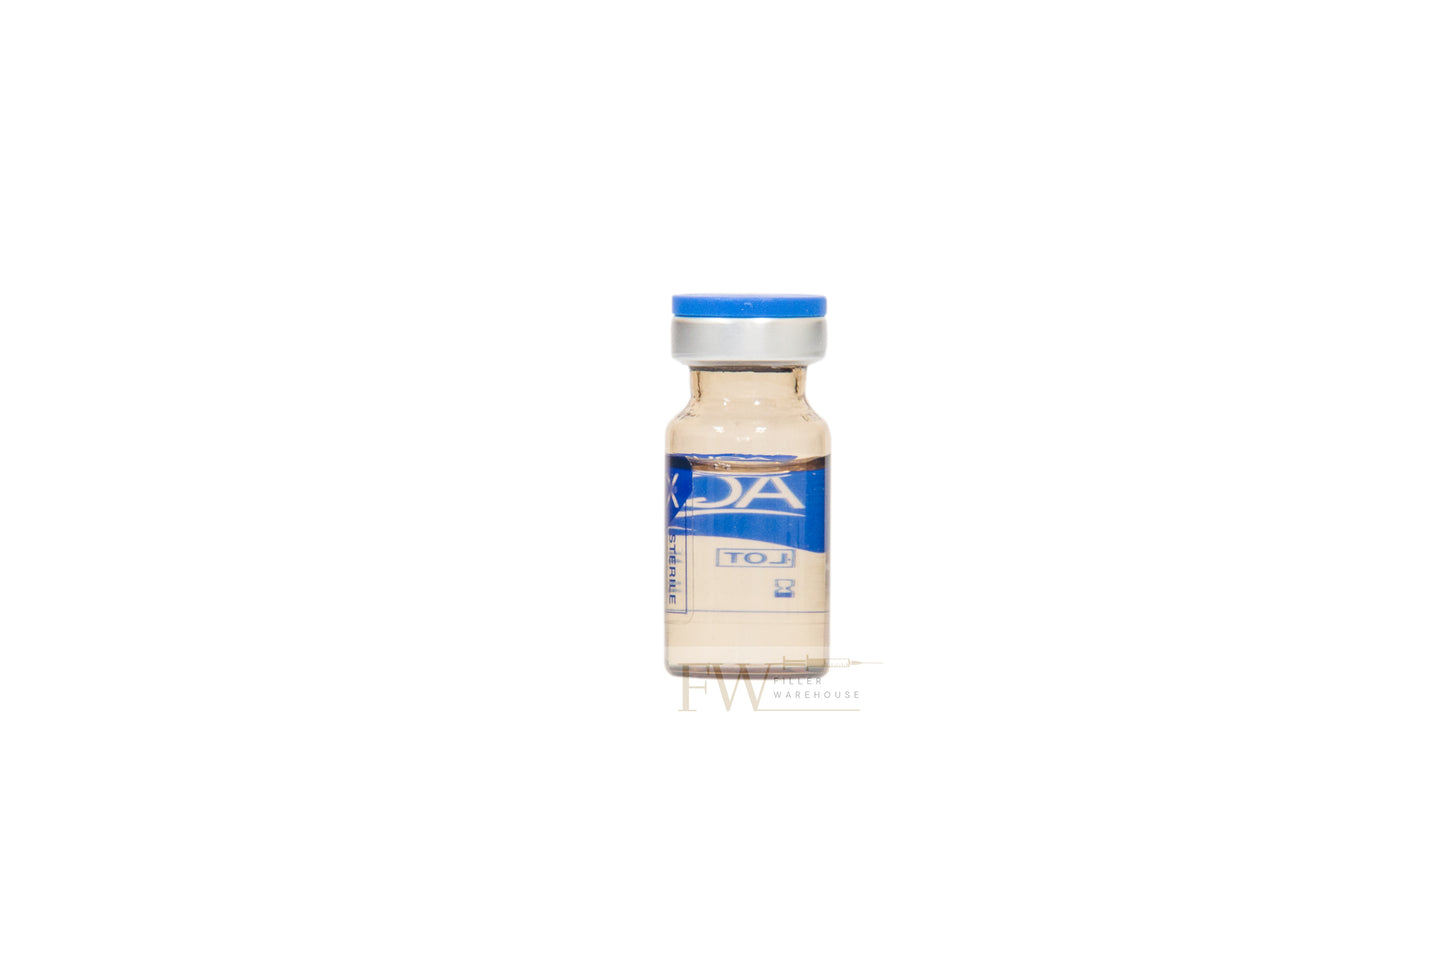 Aqualyx Fat Dissolve - 1 Vial x 8ml